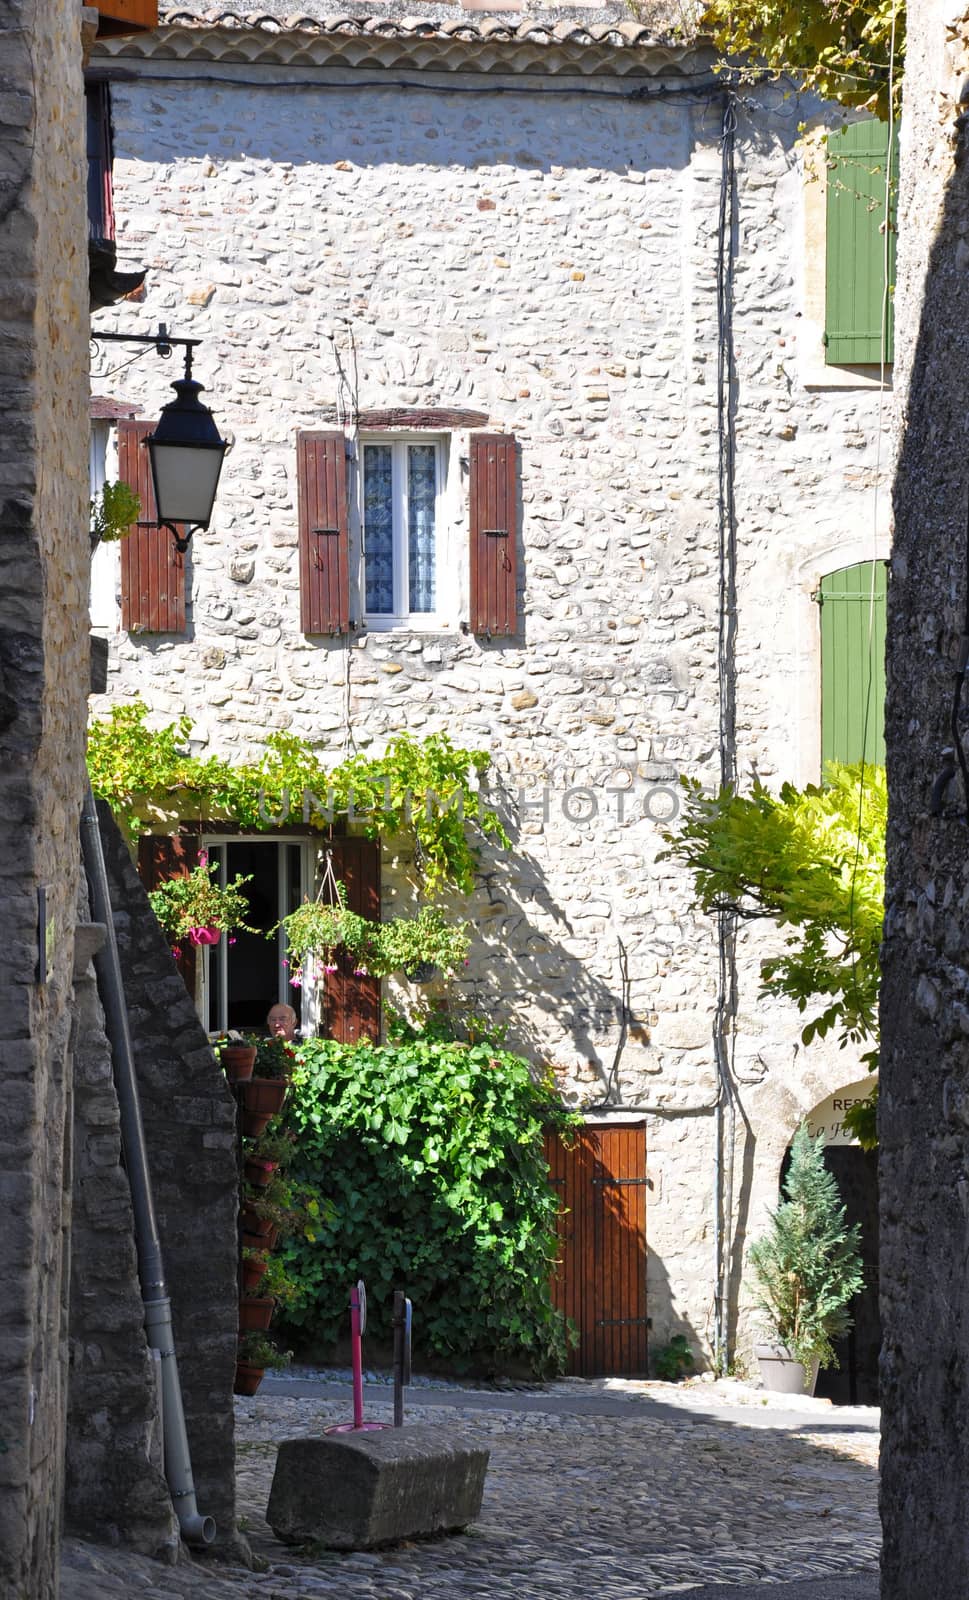 Rue des Fours, as it opens into Place de Vieux-Marche in the old medieval village of Vaison-la-Romaine, in Provence, France. (taken in the Haute Ville)